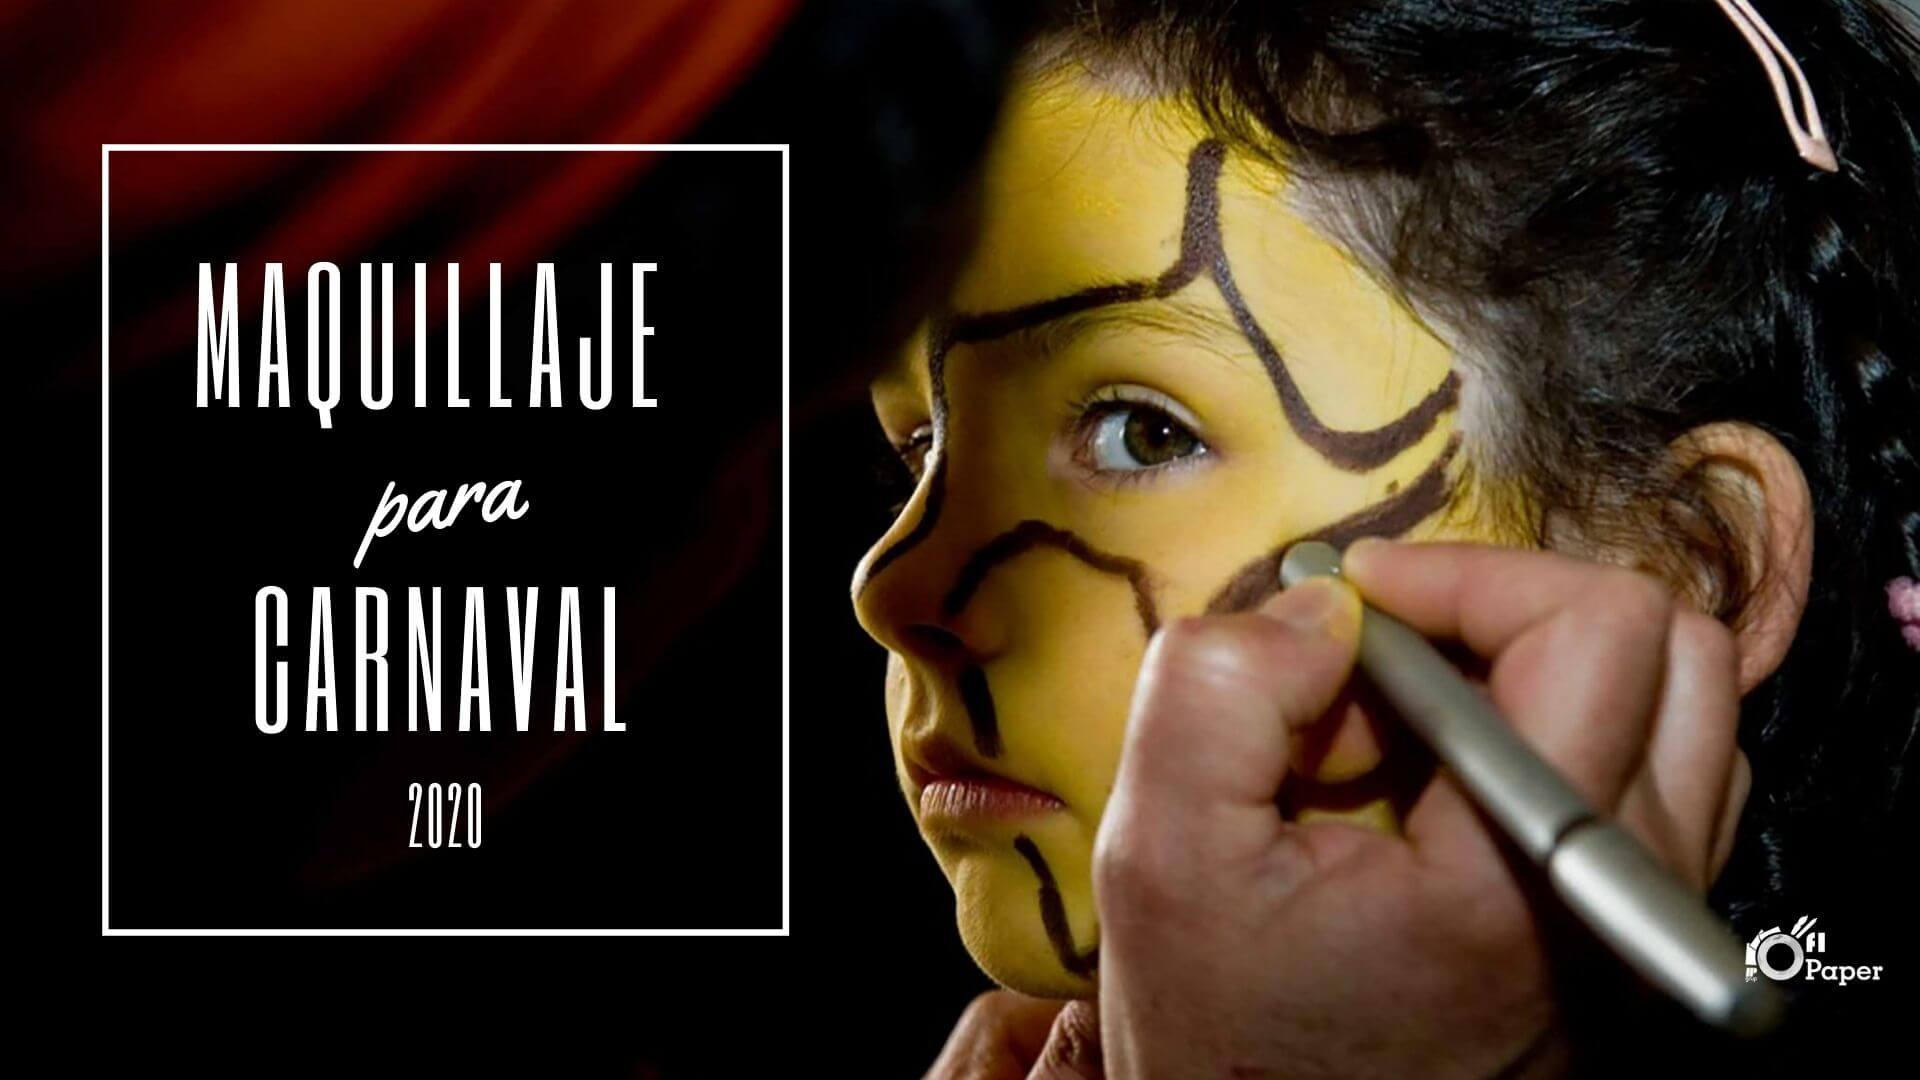 Descodificar Walter Cunningham Correctamente ▷ Maquillaje carnaval 2020 muy especial - Ofipaper.es Blog